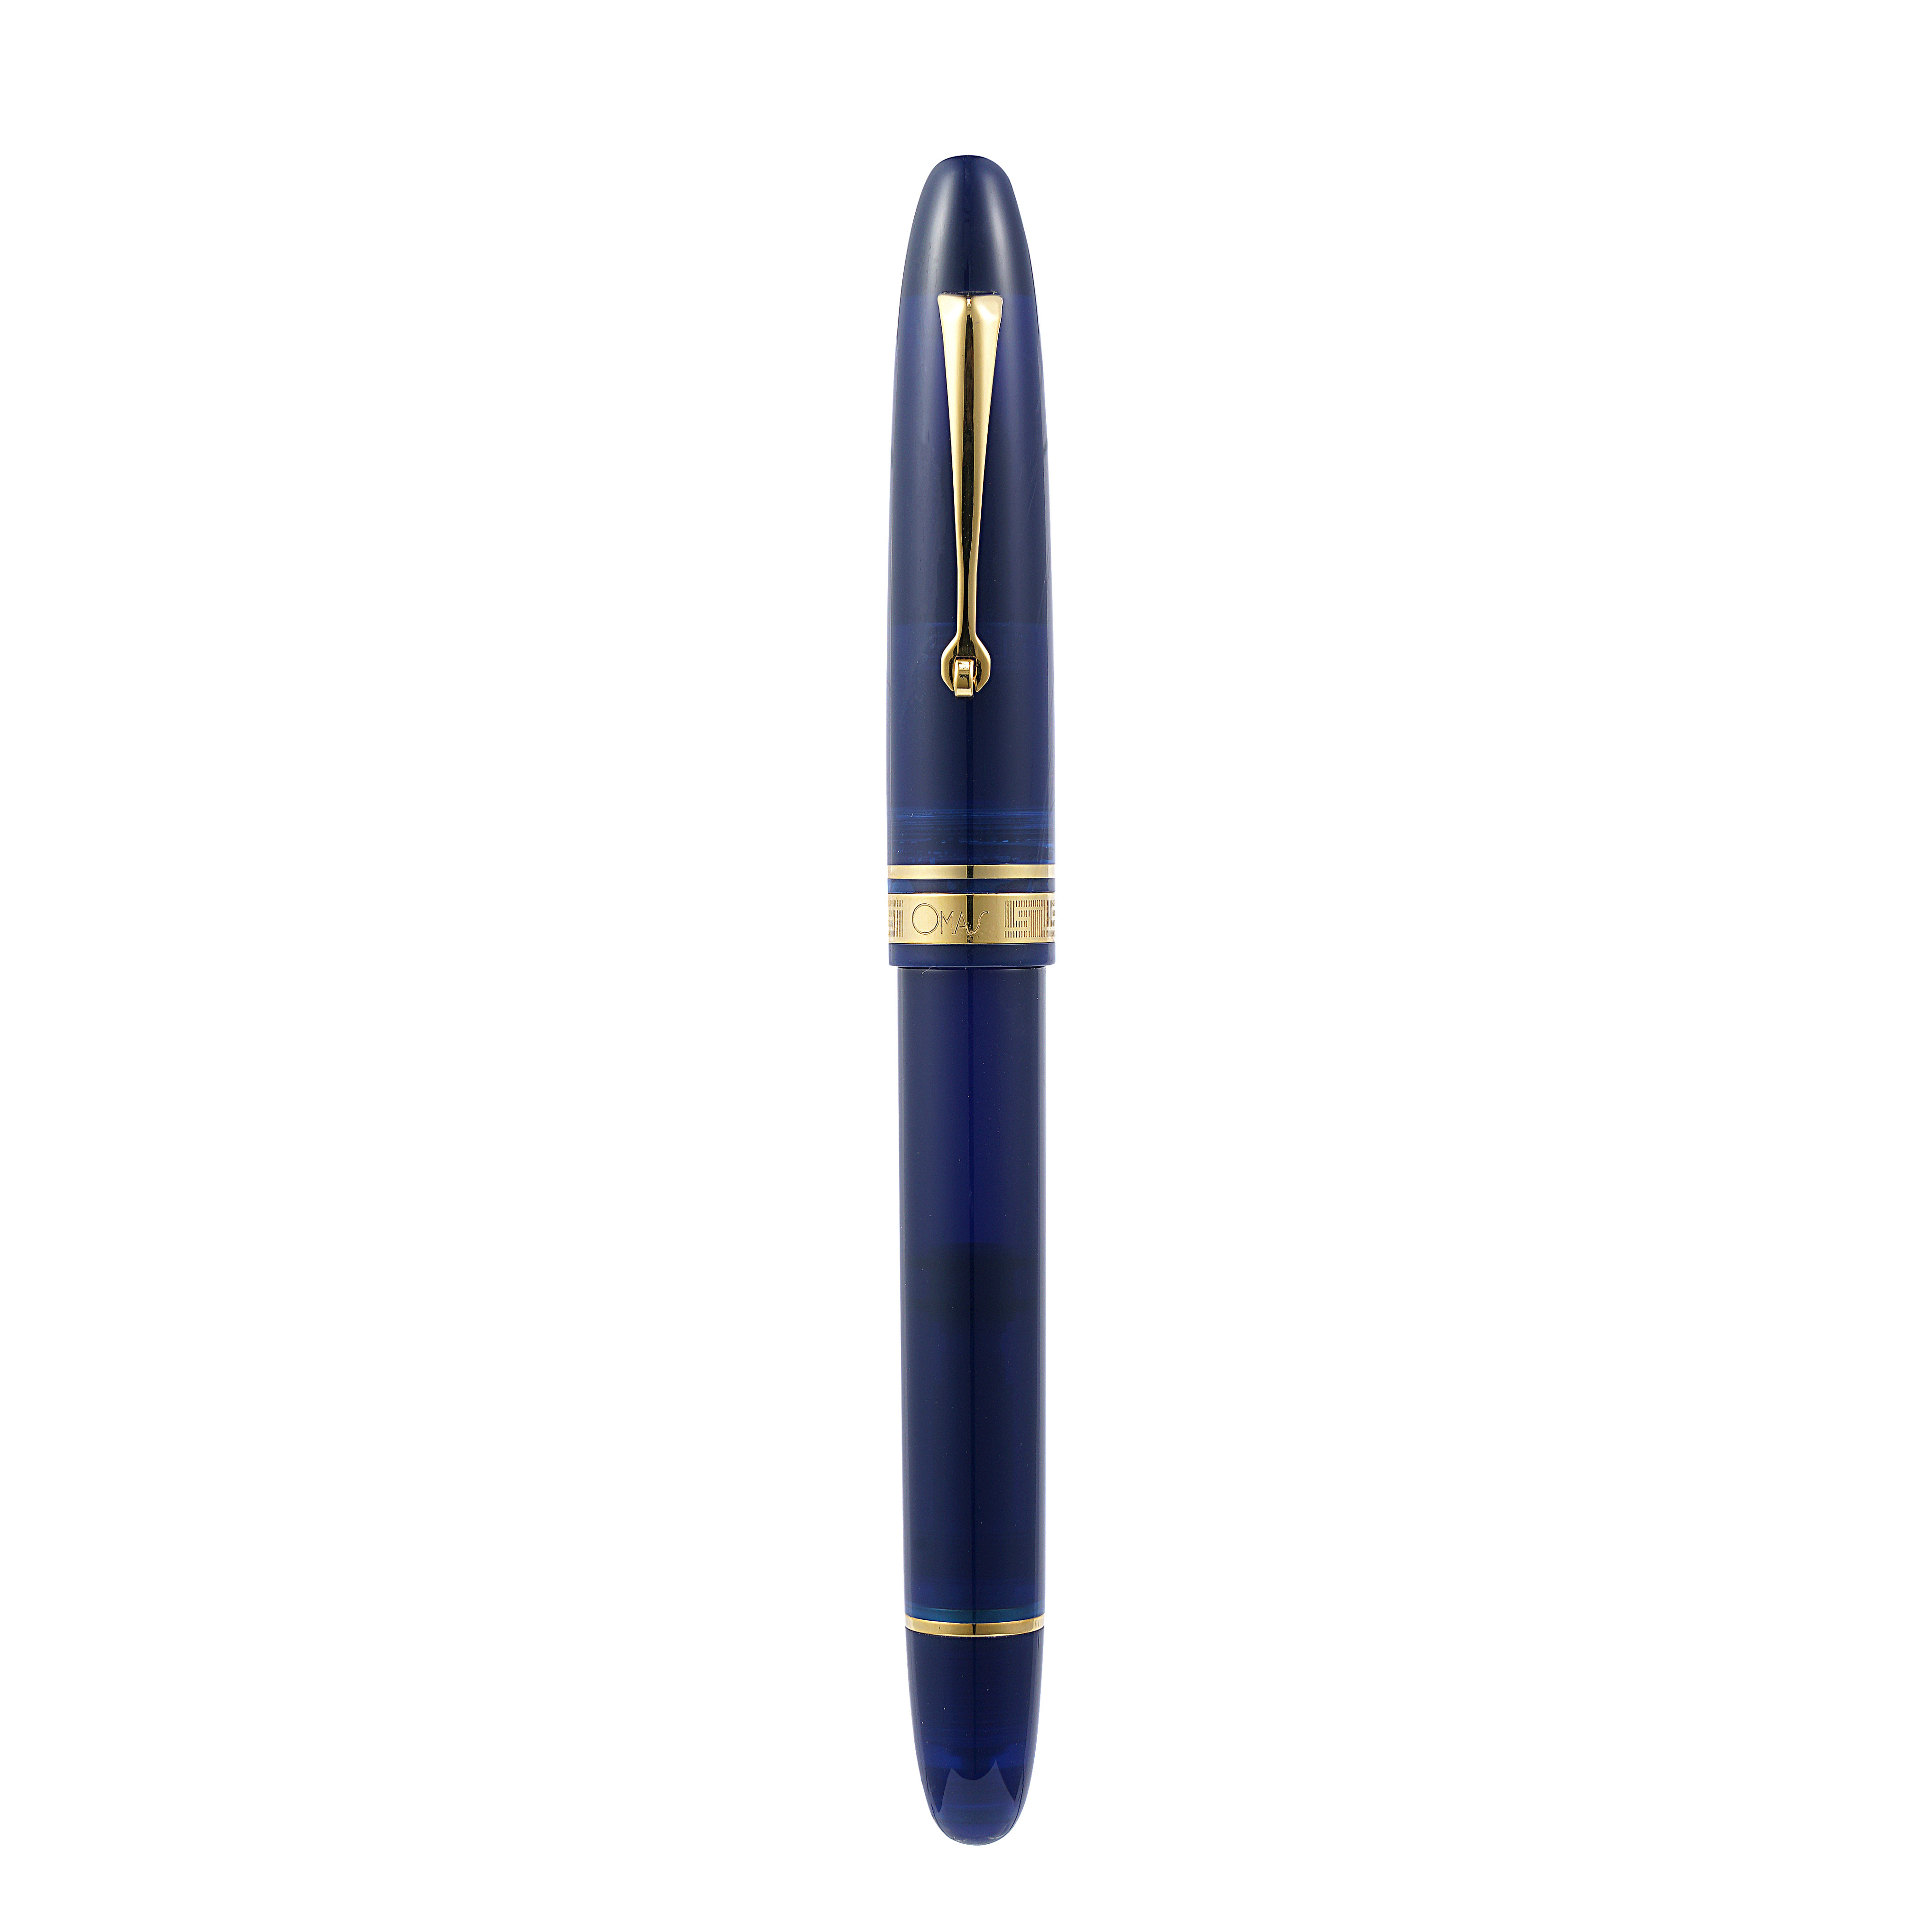 Penna stilografica Omas Ogiva in blu con finiture dorate